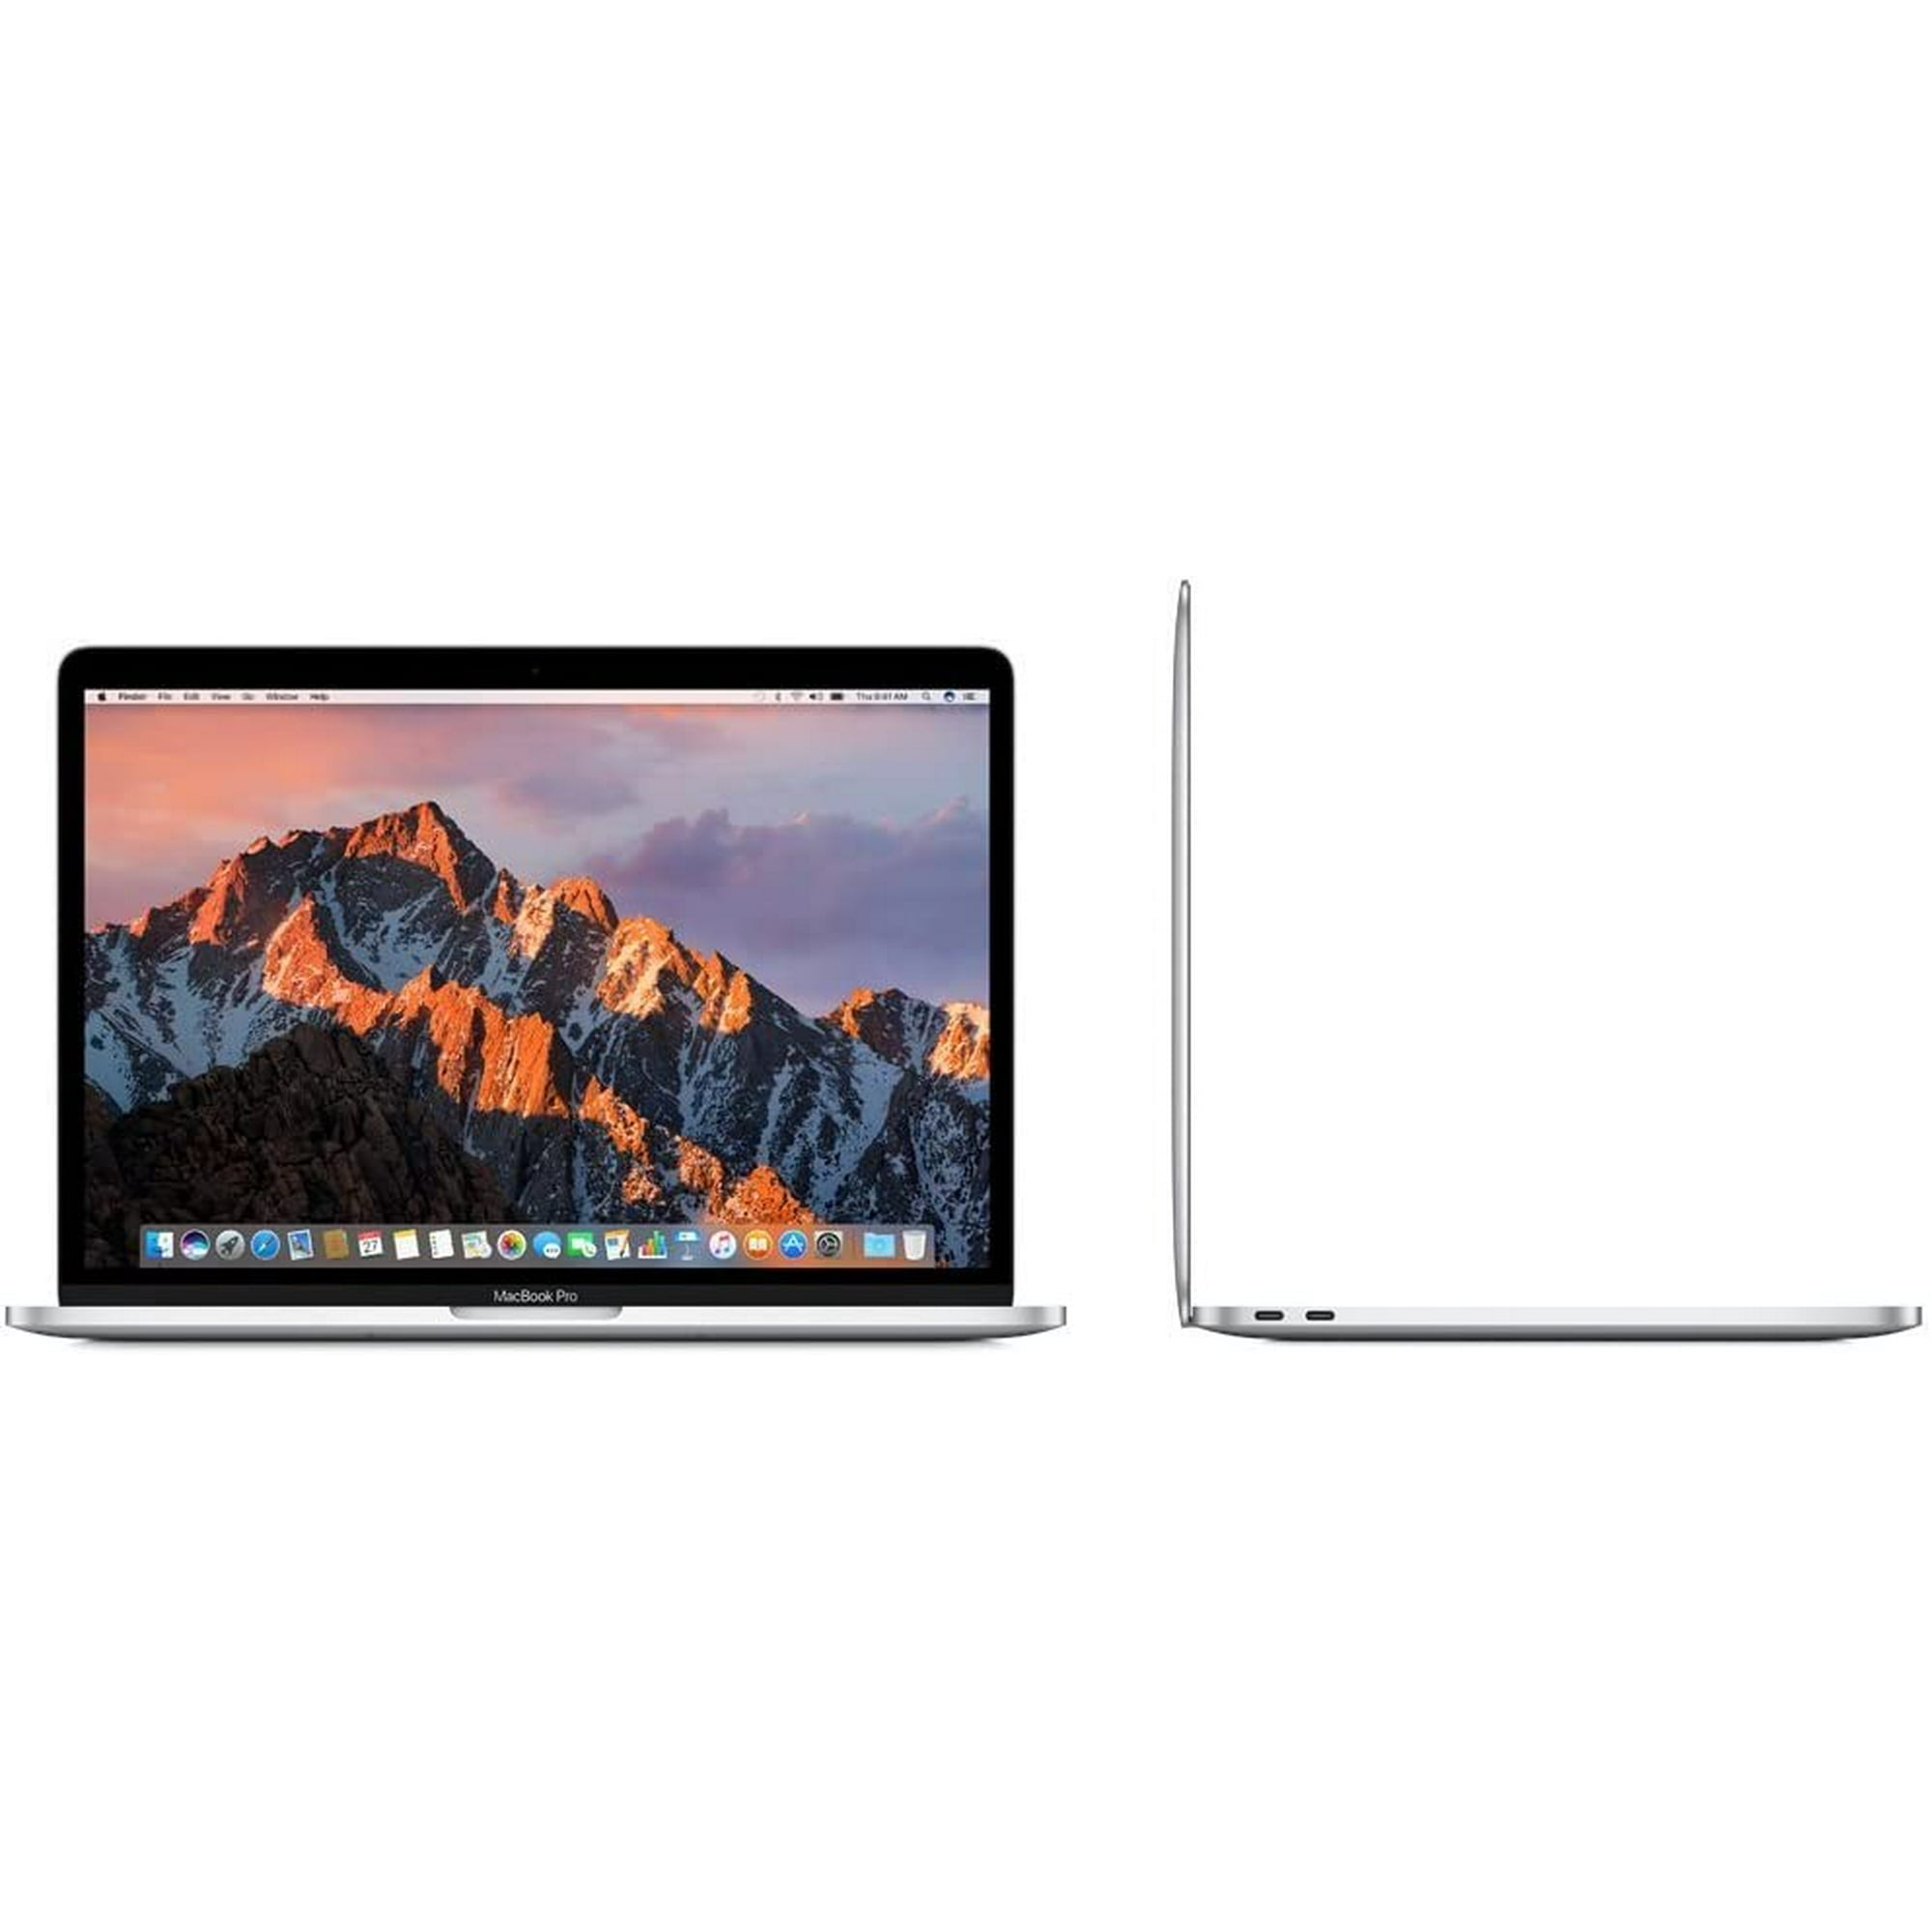 Apple MacBook Pro 13-inch (i5 2.9GHz, 256GB SSD) (Late 2016